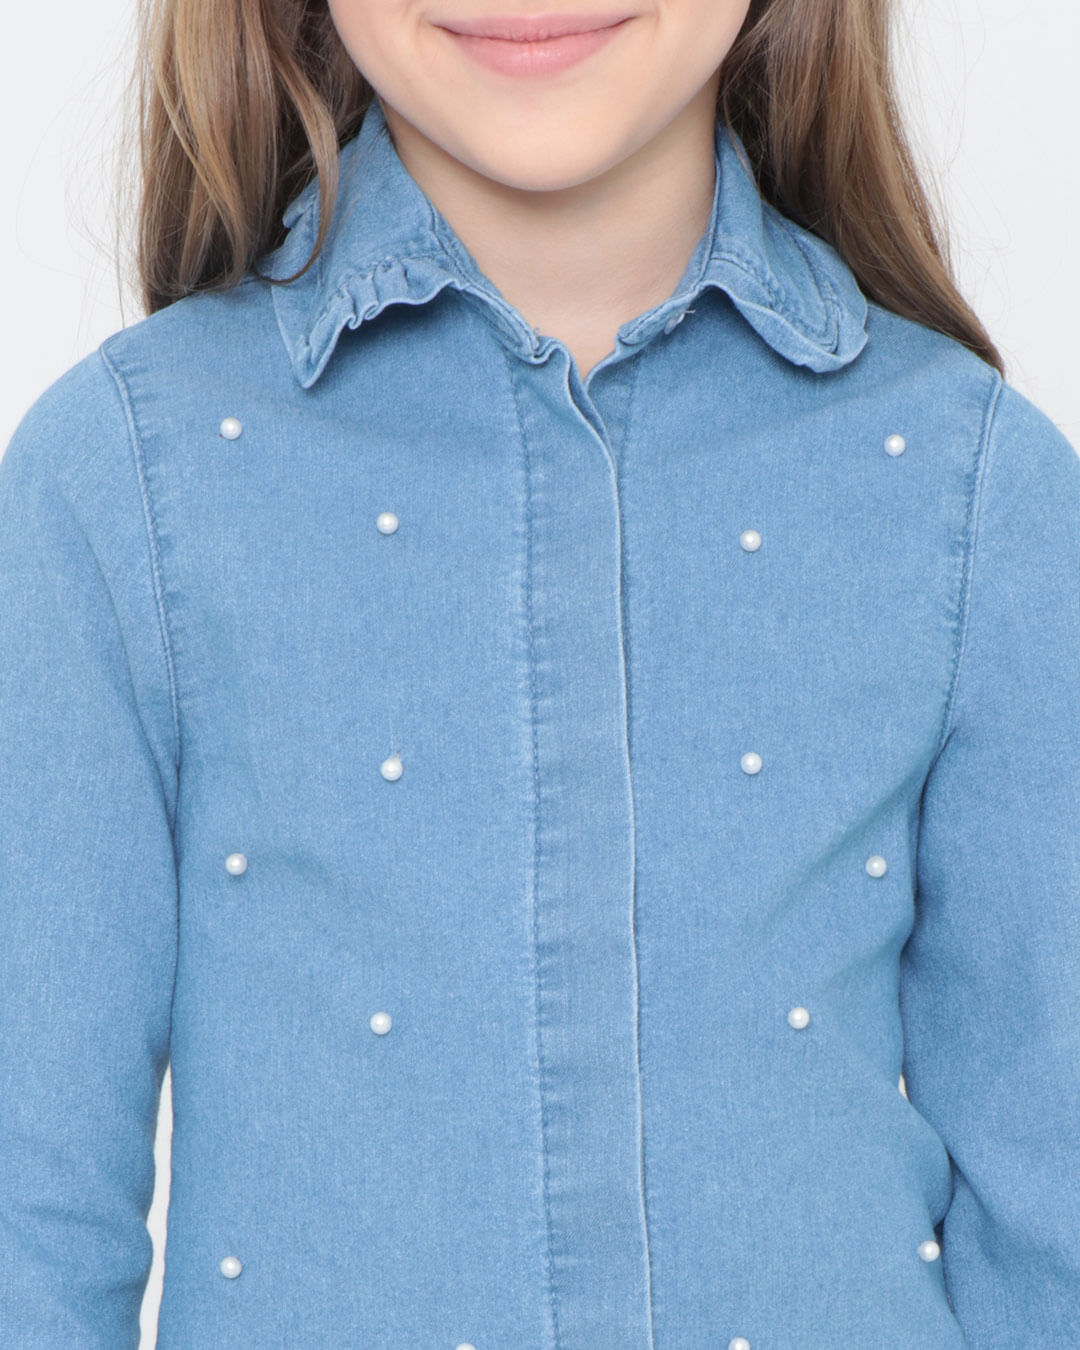 Camisa-Infantil-Jeans-Manga-Longa-Perolas-Azul